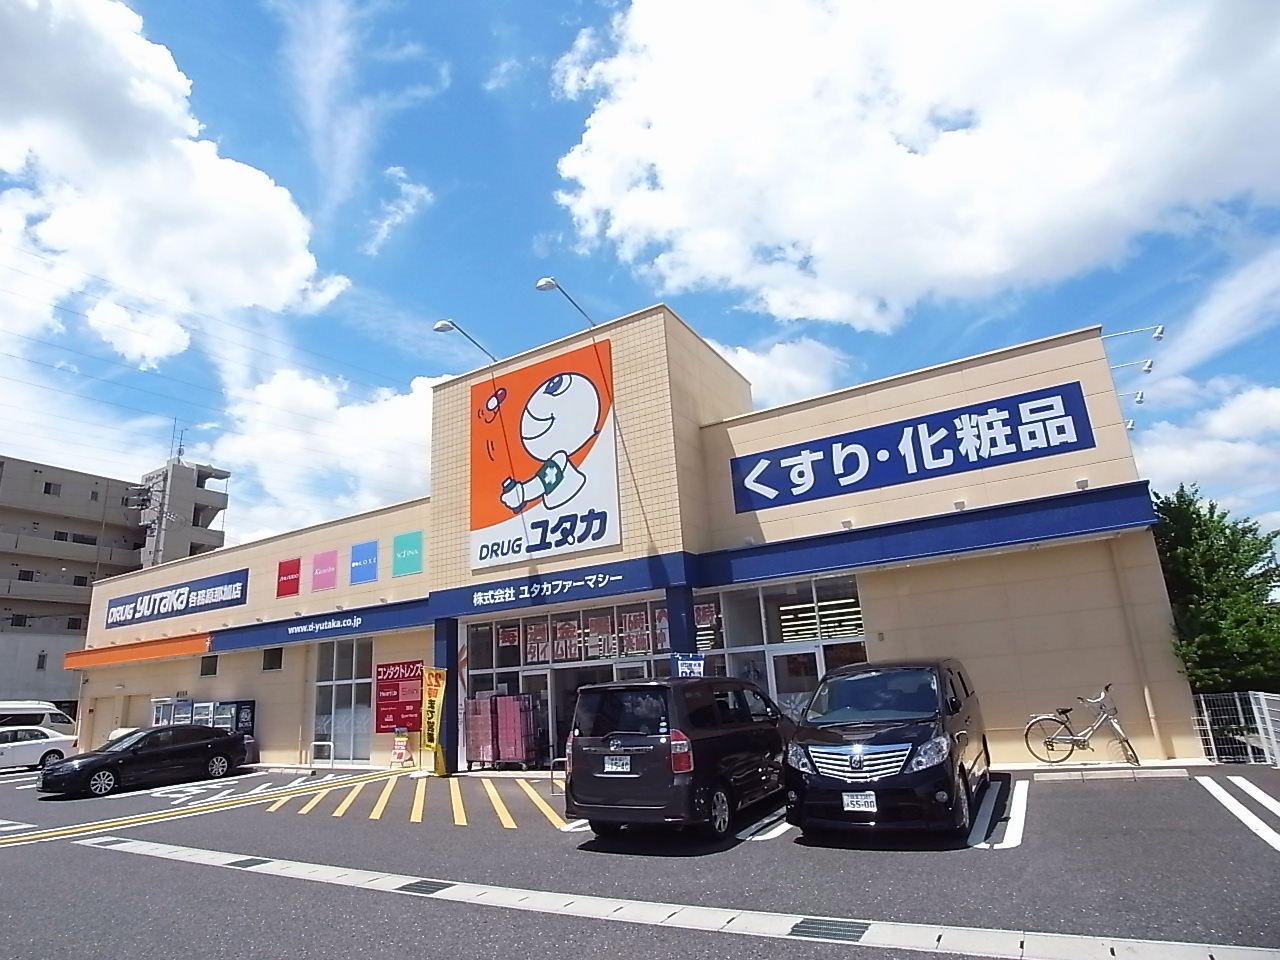 Dorakkusutoa. Drag Yutaka Kakamigahara Naka shop 764m until (drugstore)